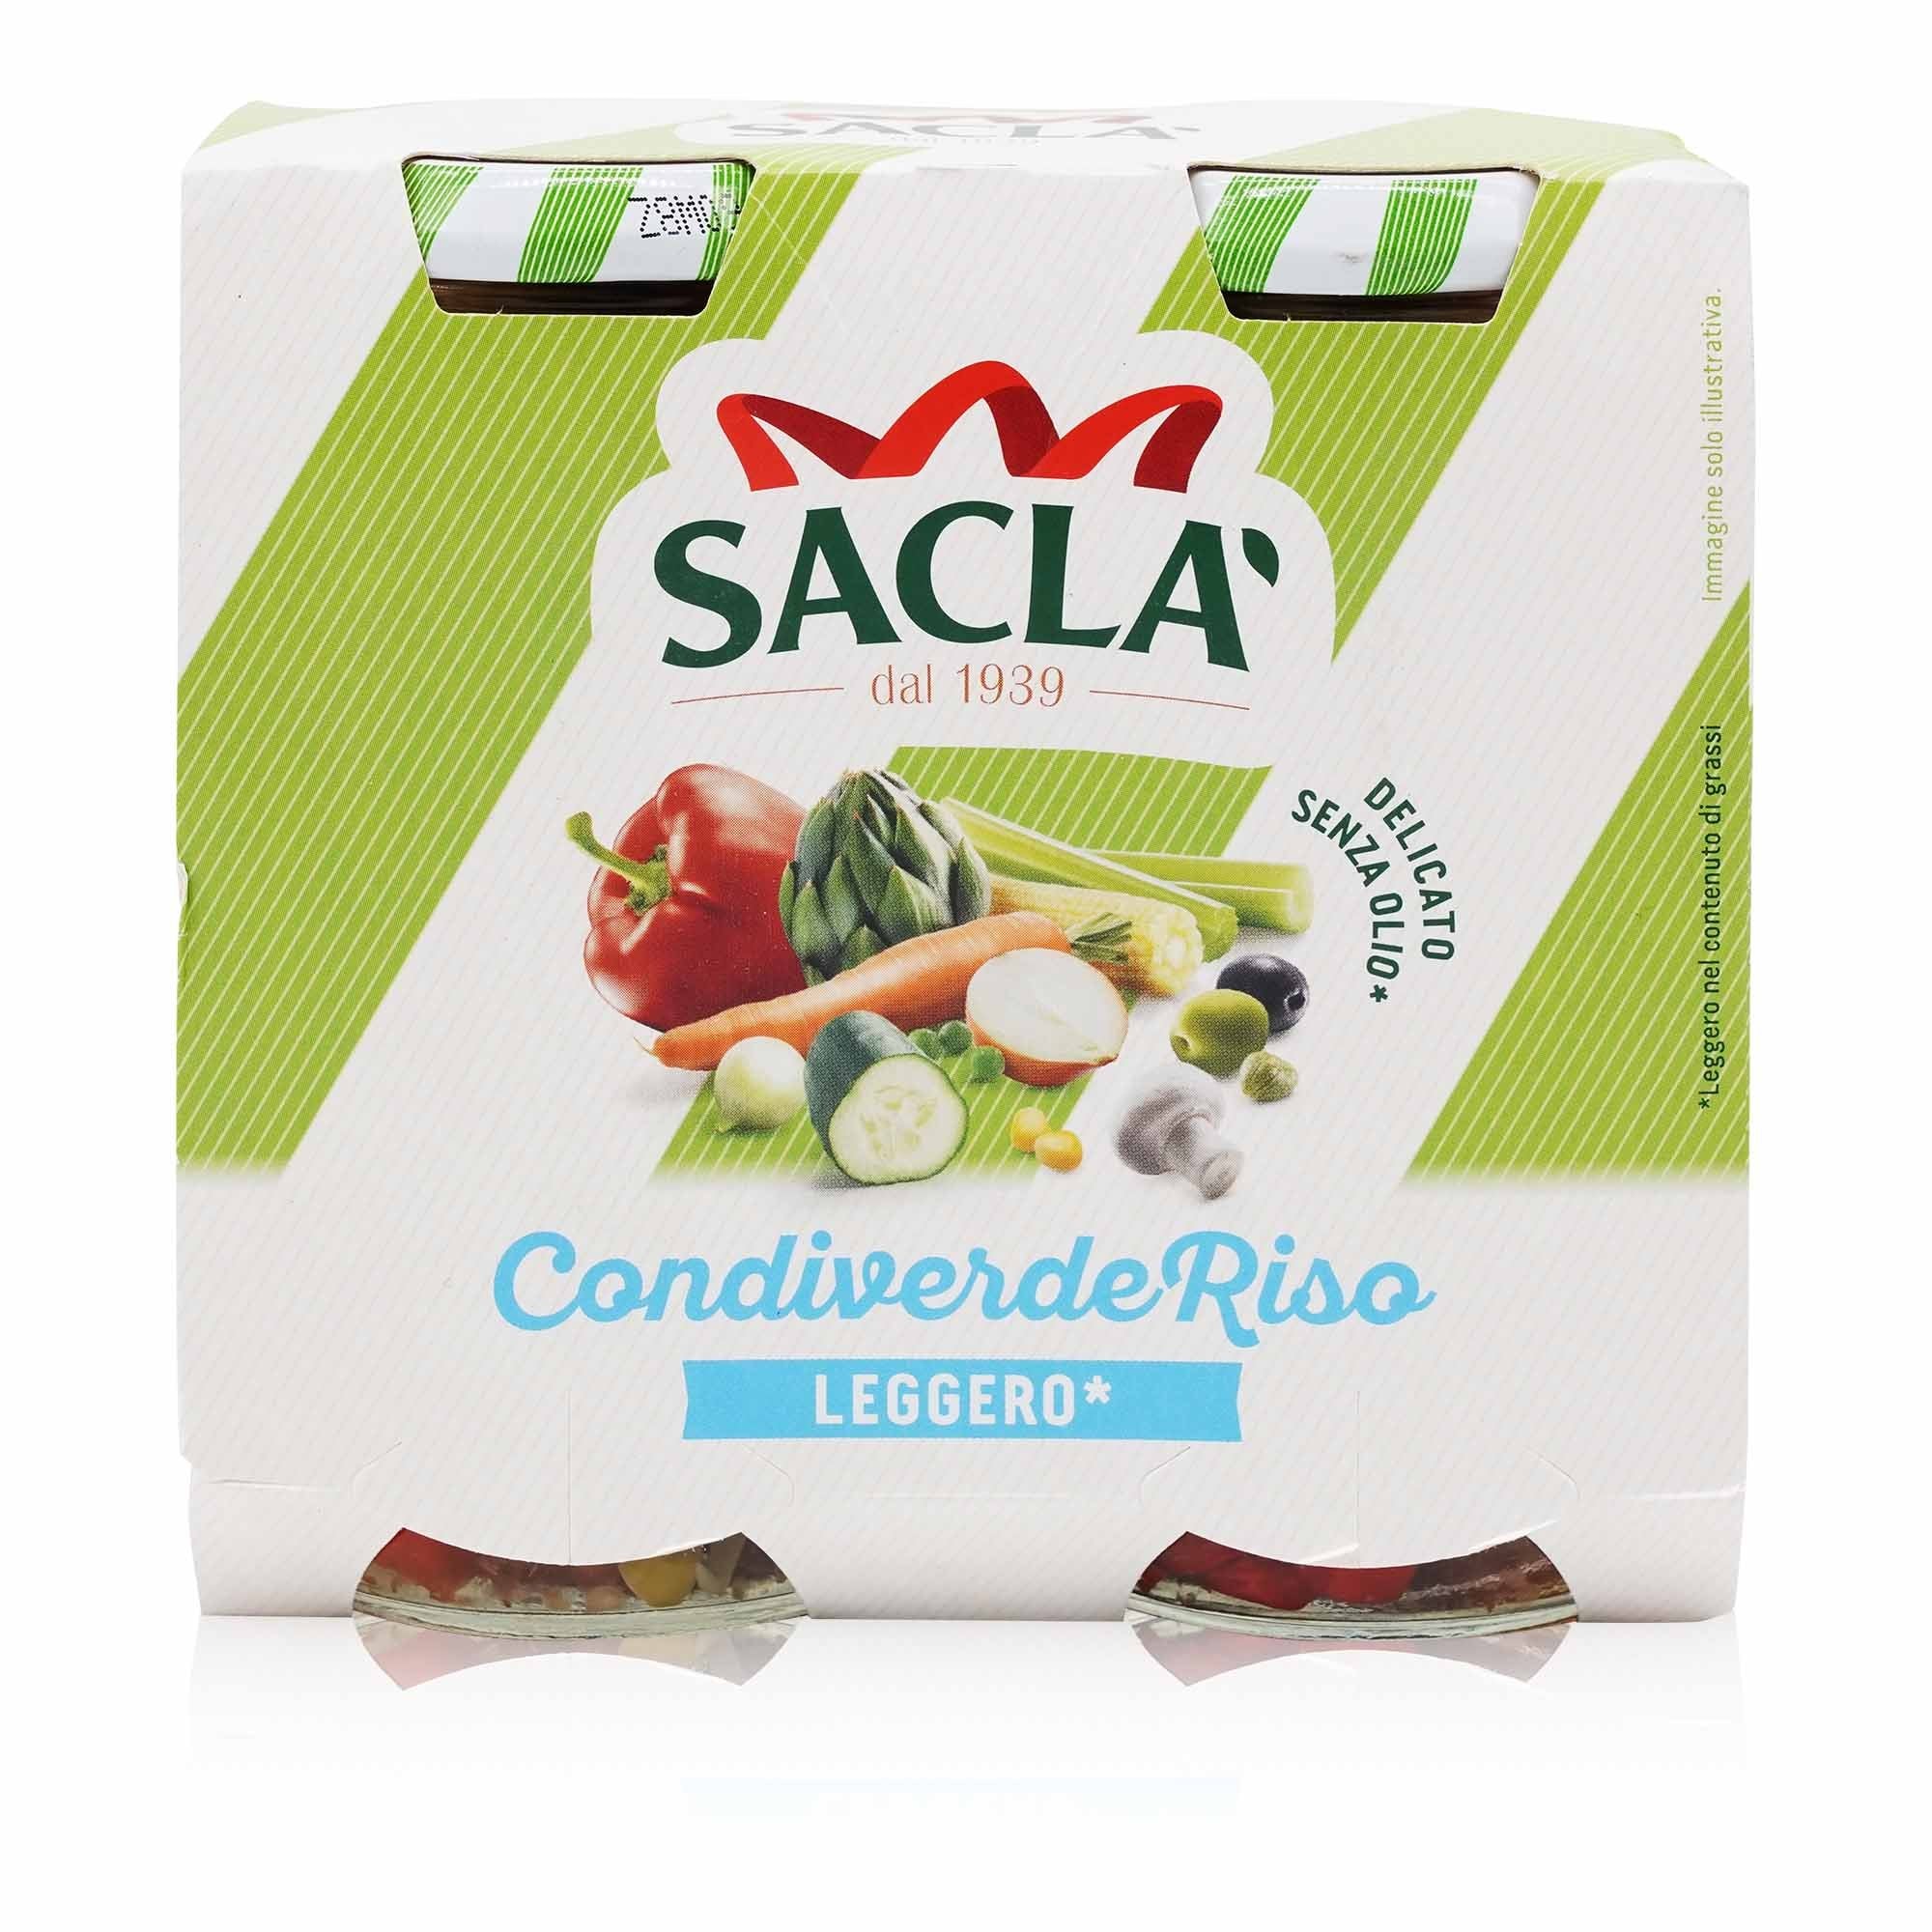 SACLÀ Condiverde Riso Leggero – Gemüsemix leicht für Reissalat - 0,58kg